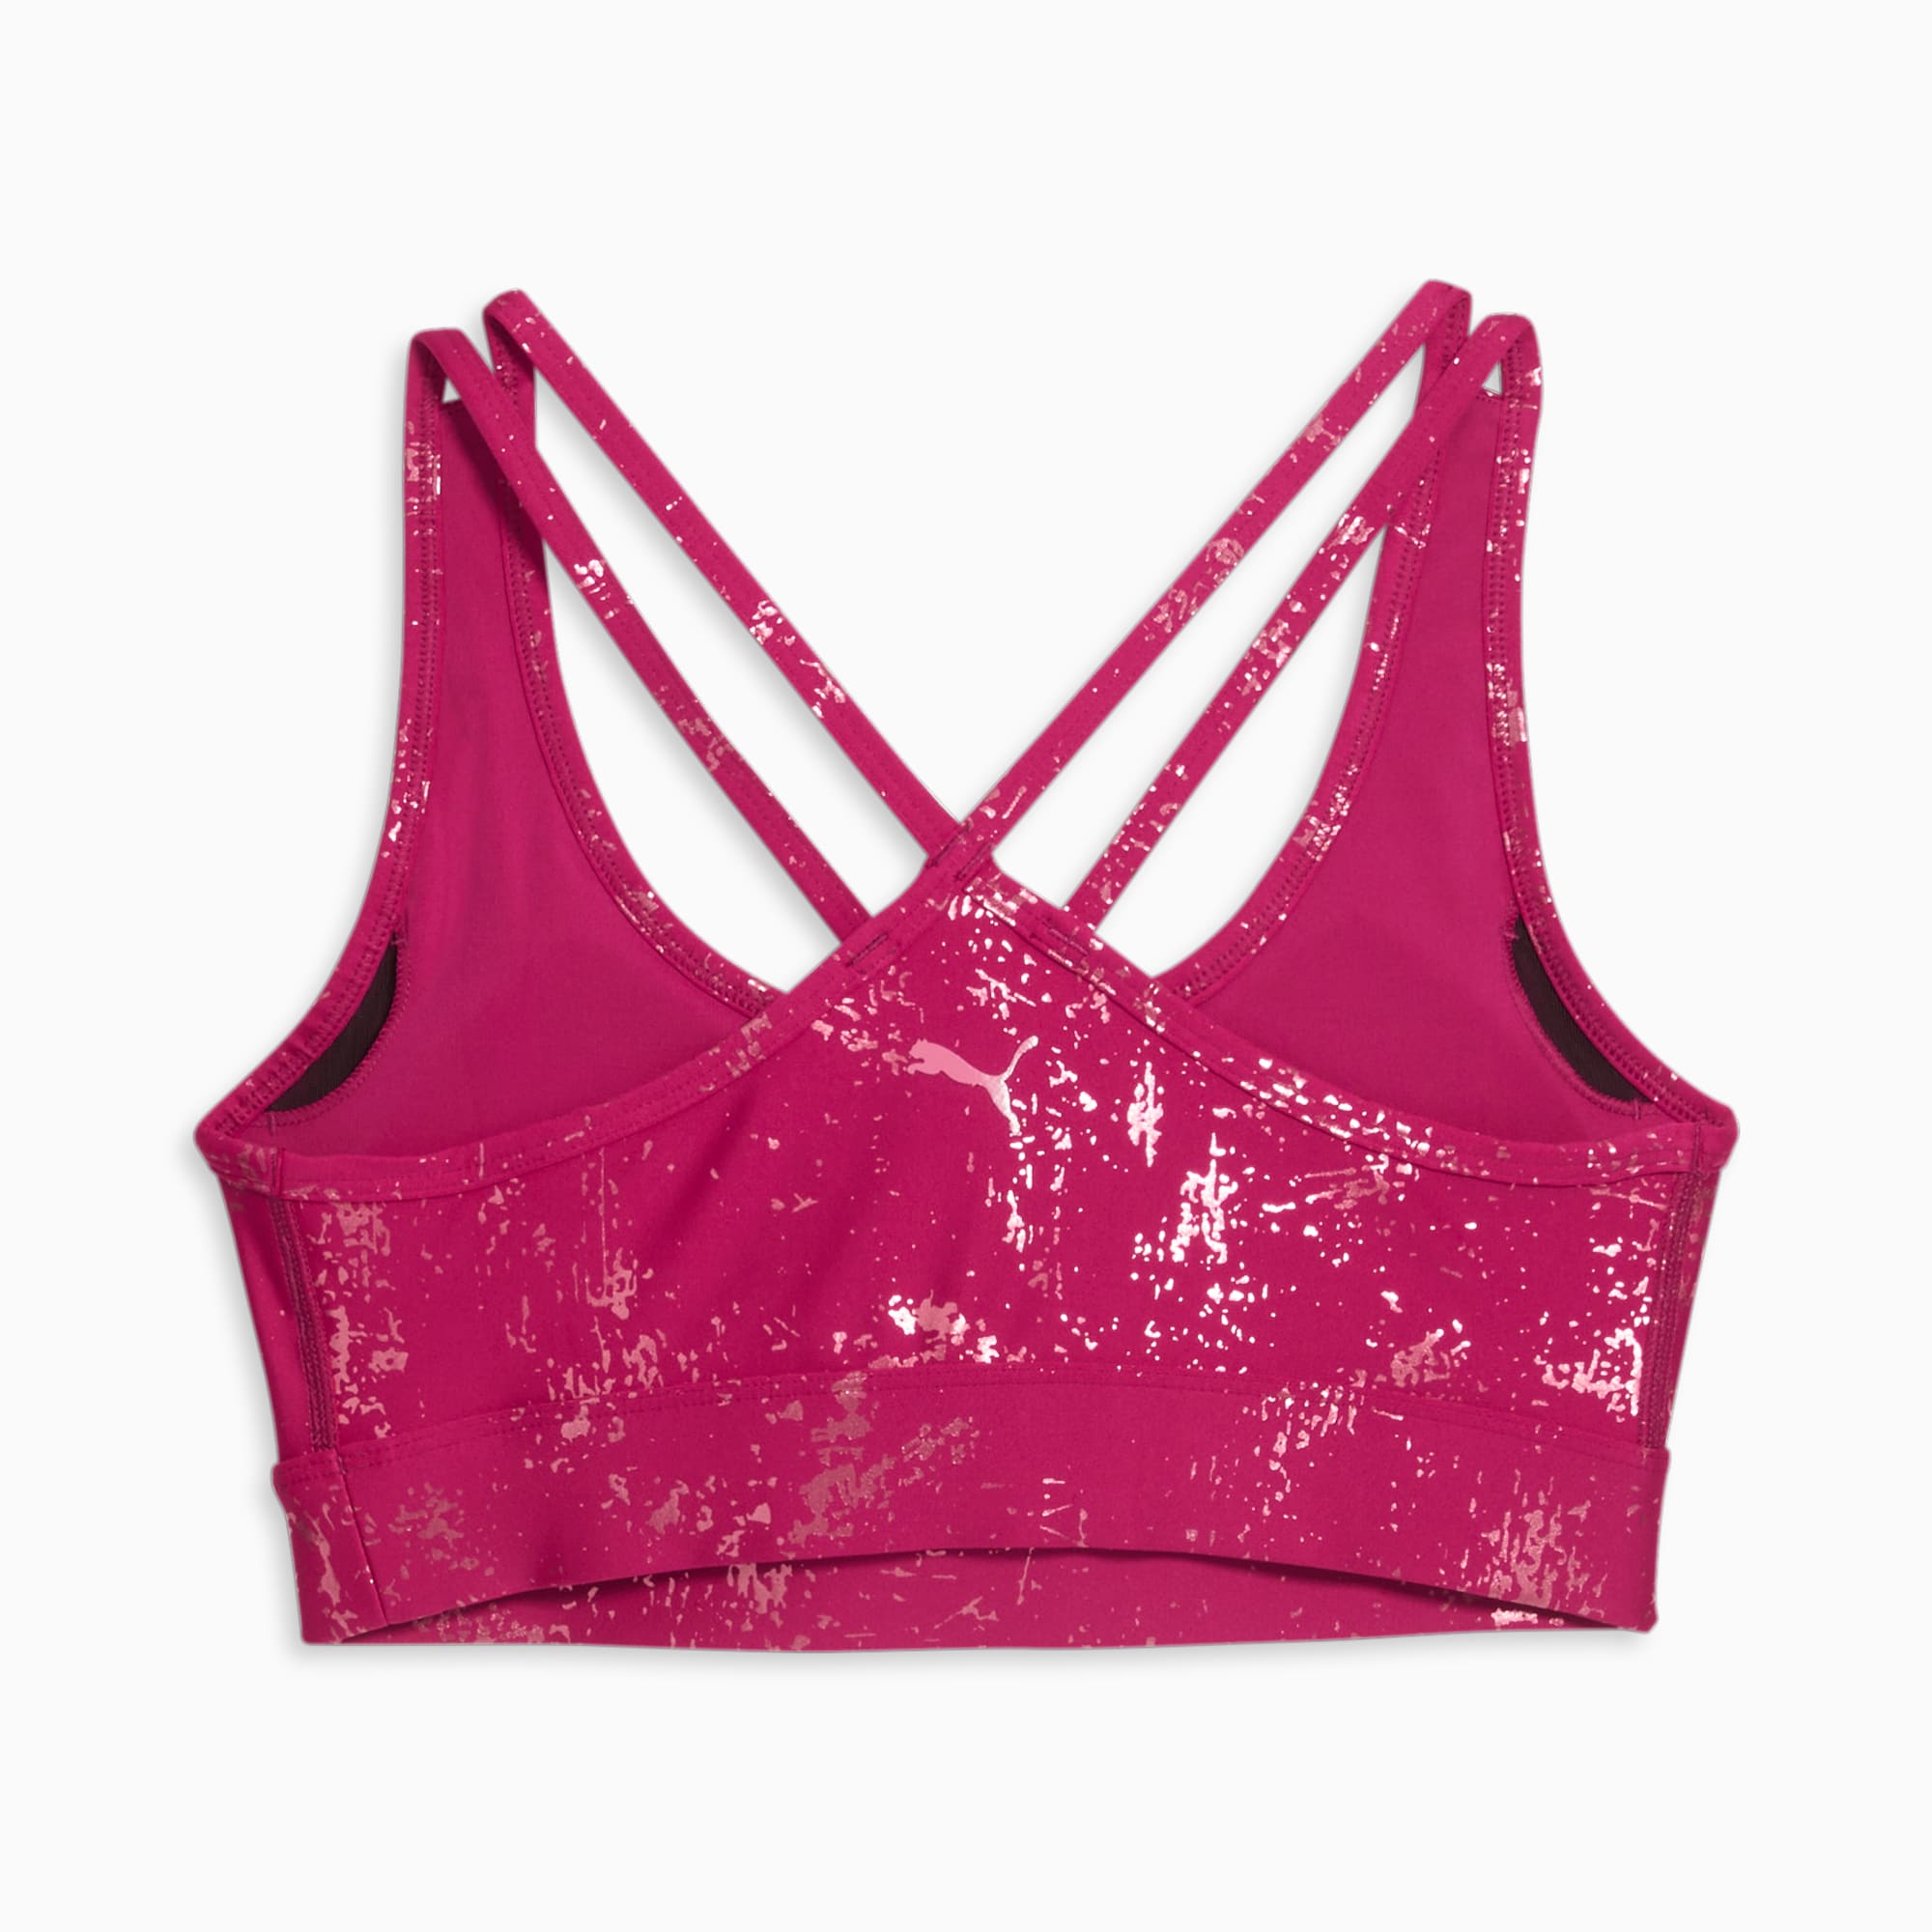 Puma Sport bras size Large color pink